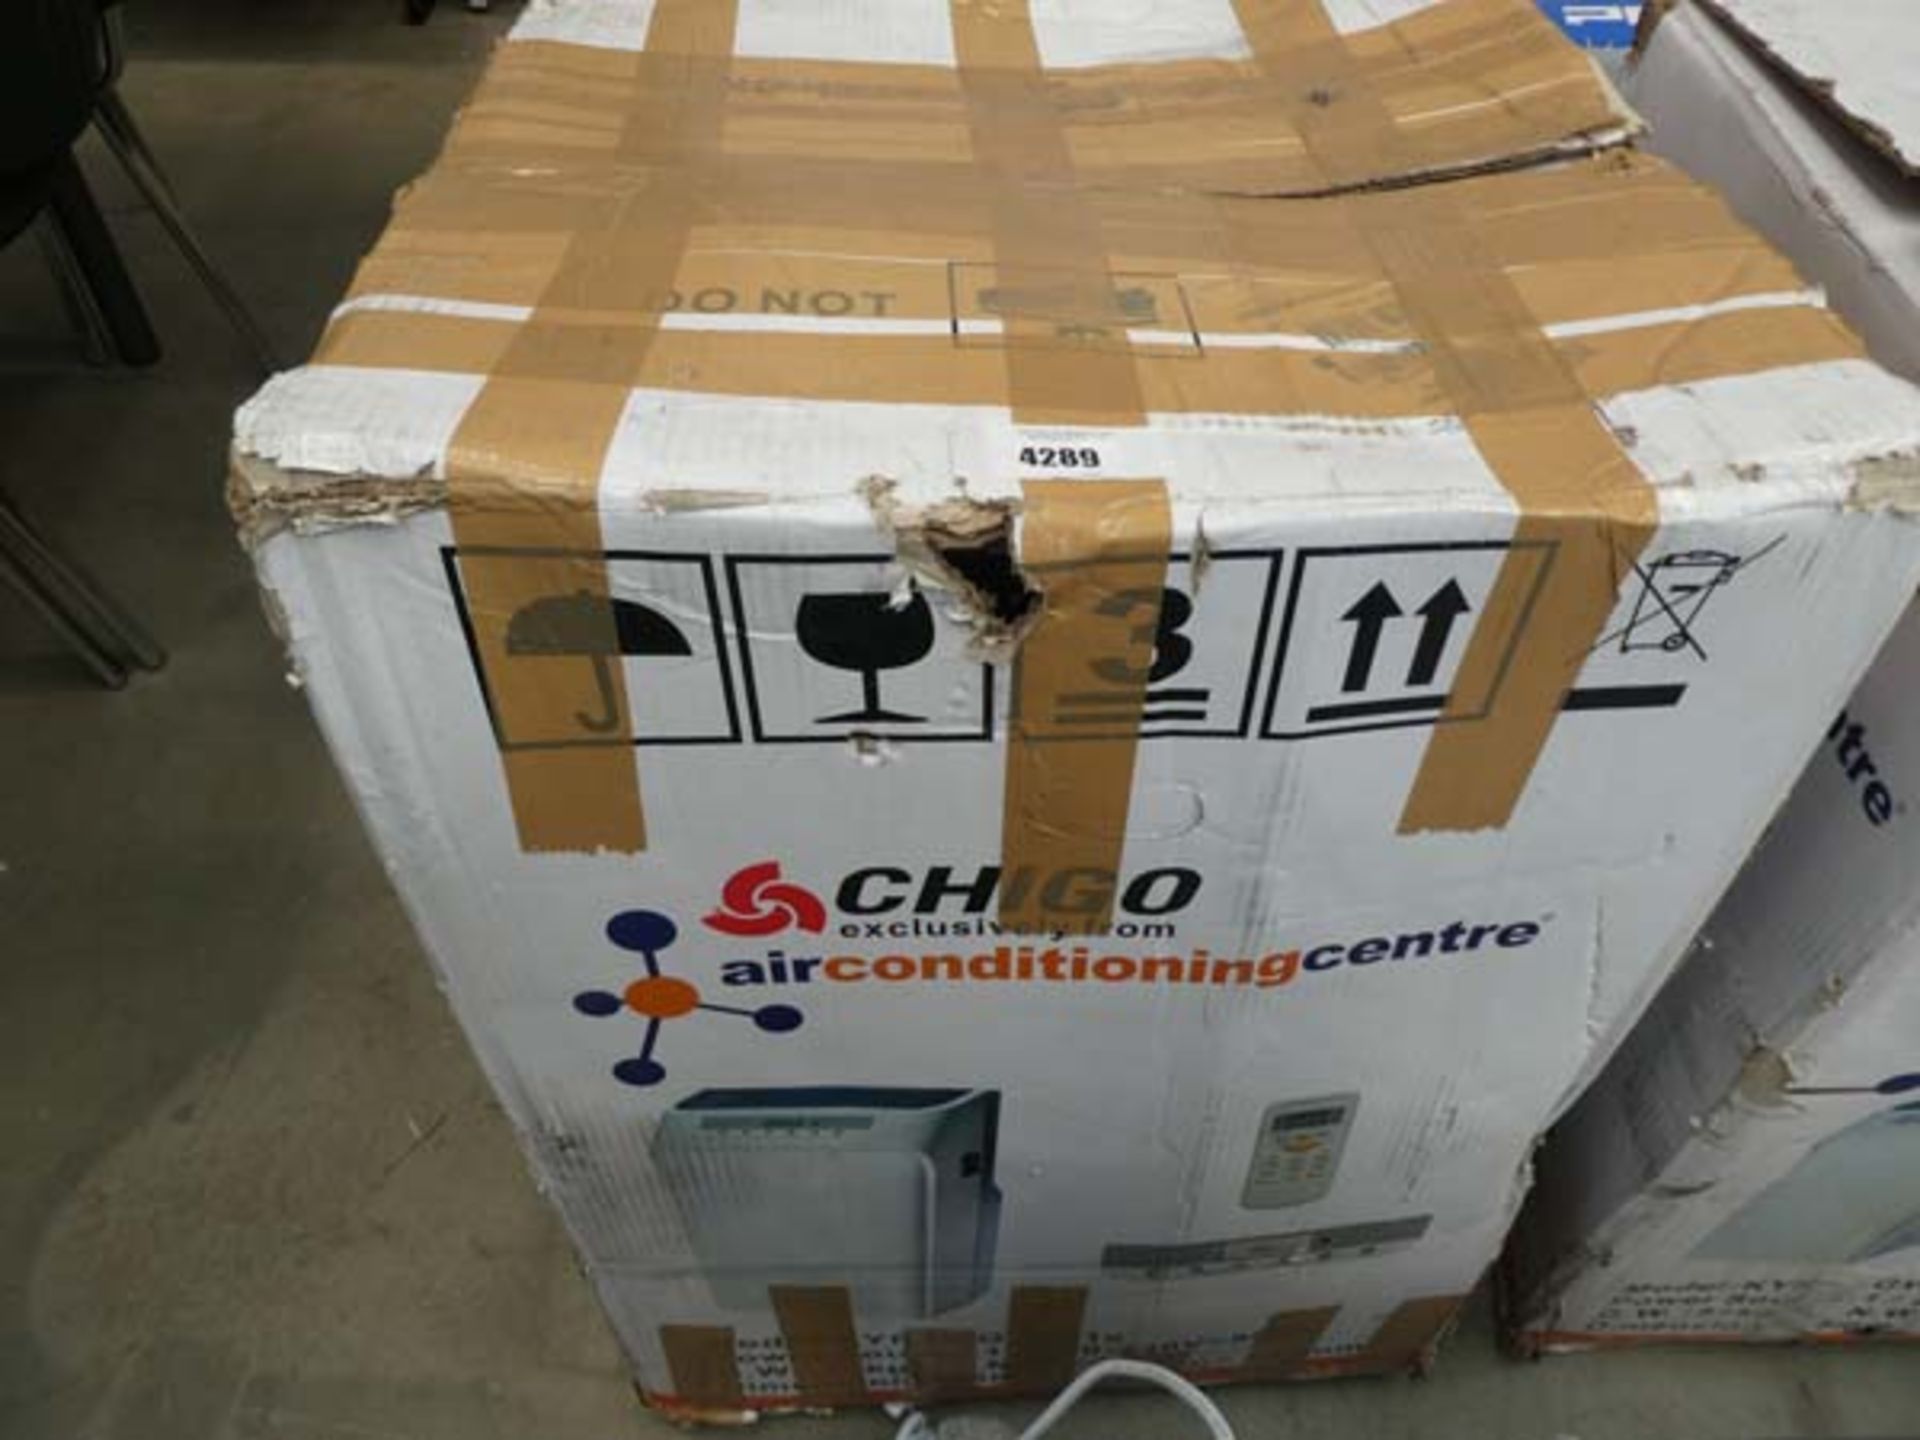 Boxed Chigo air con unit